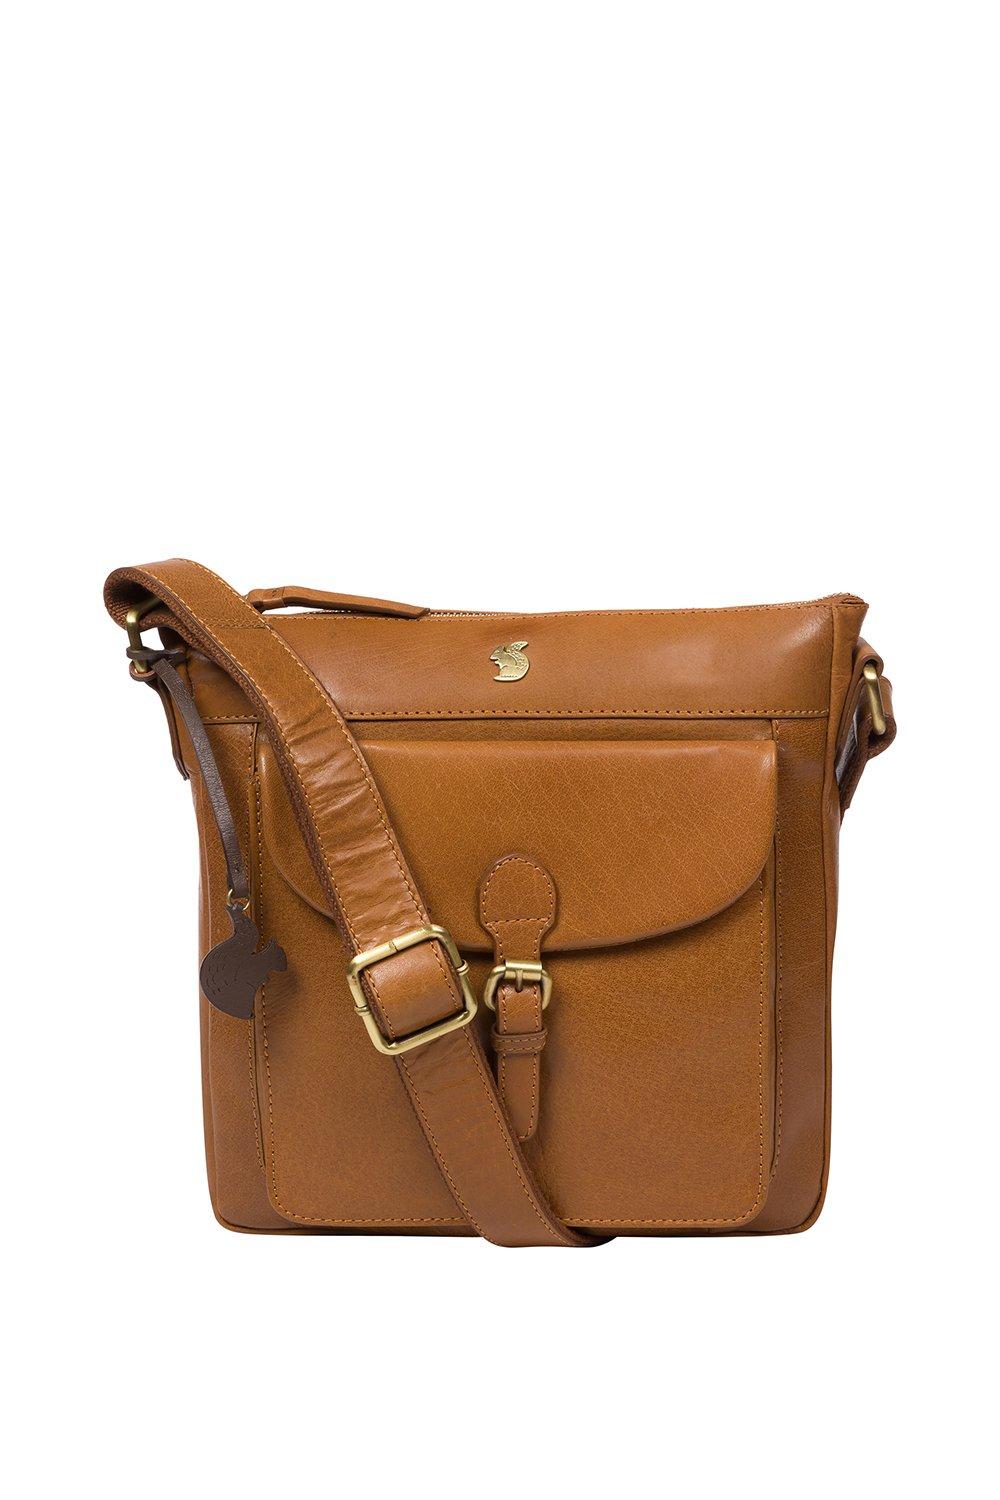 Кожаная сумка через плечо 'Josephine' Conkca London, коричневый